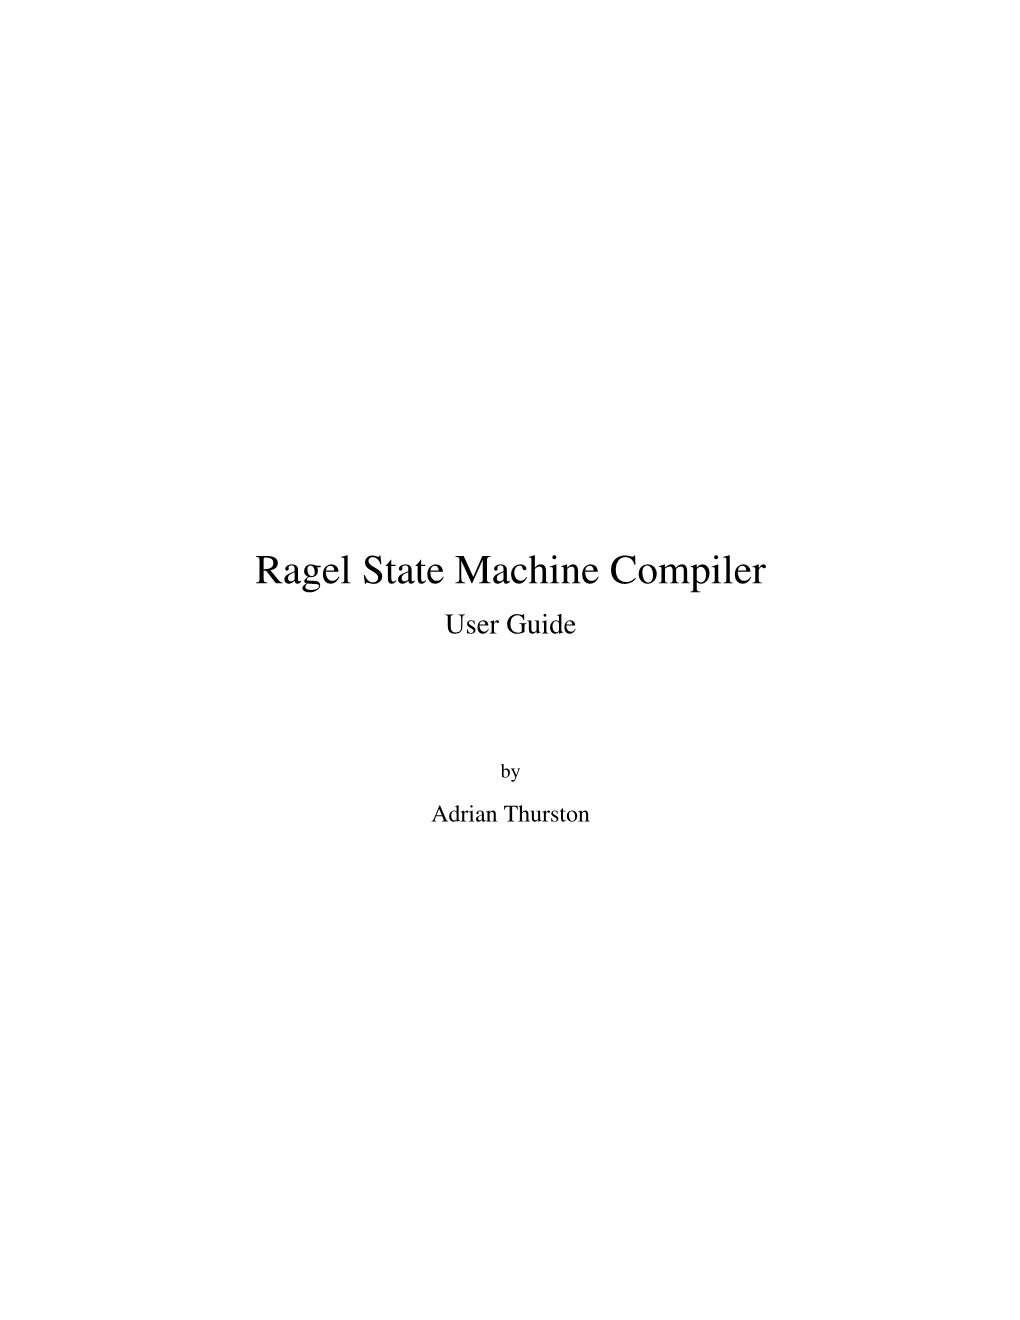 Ragel State Machine Compiler User Guide